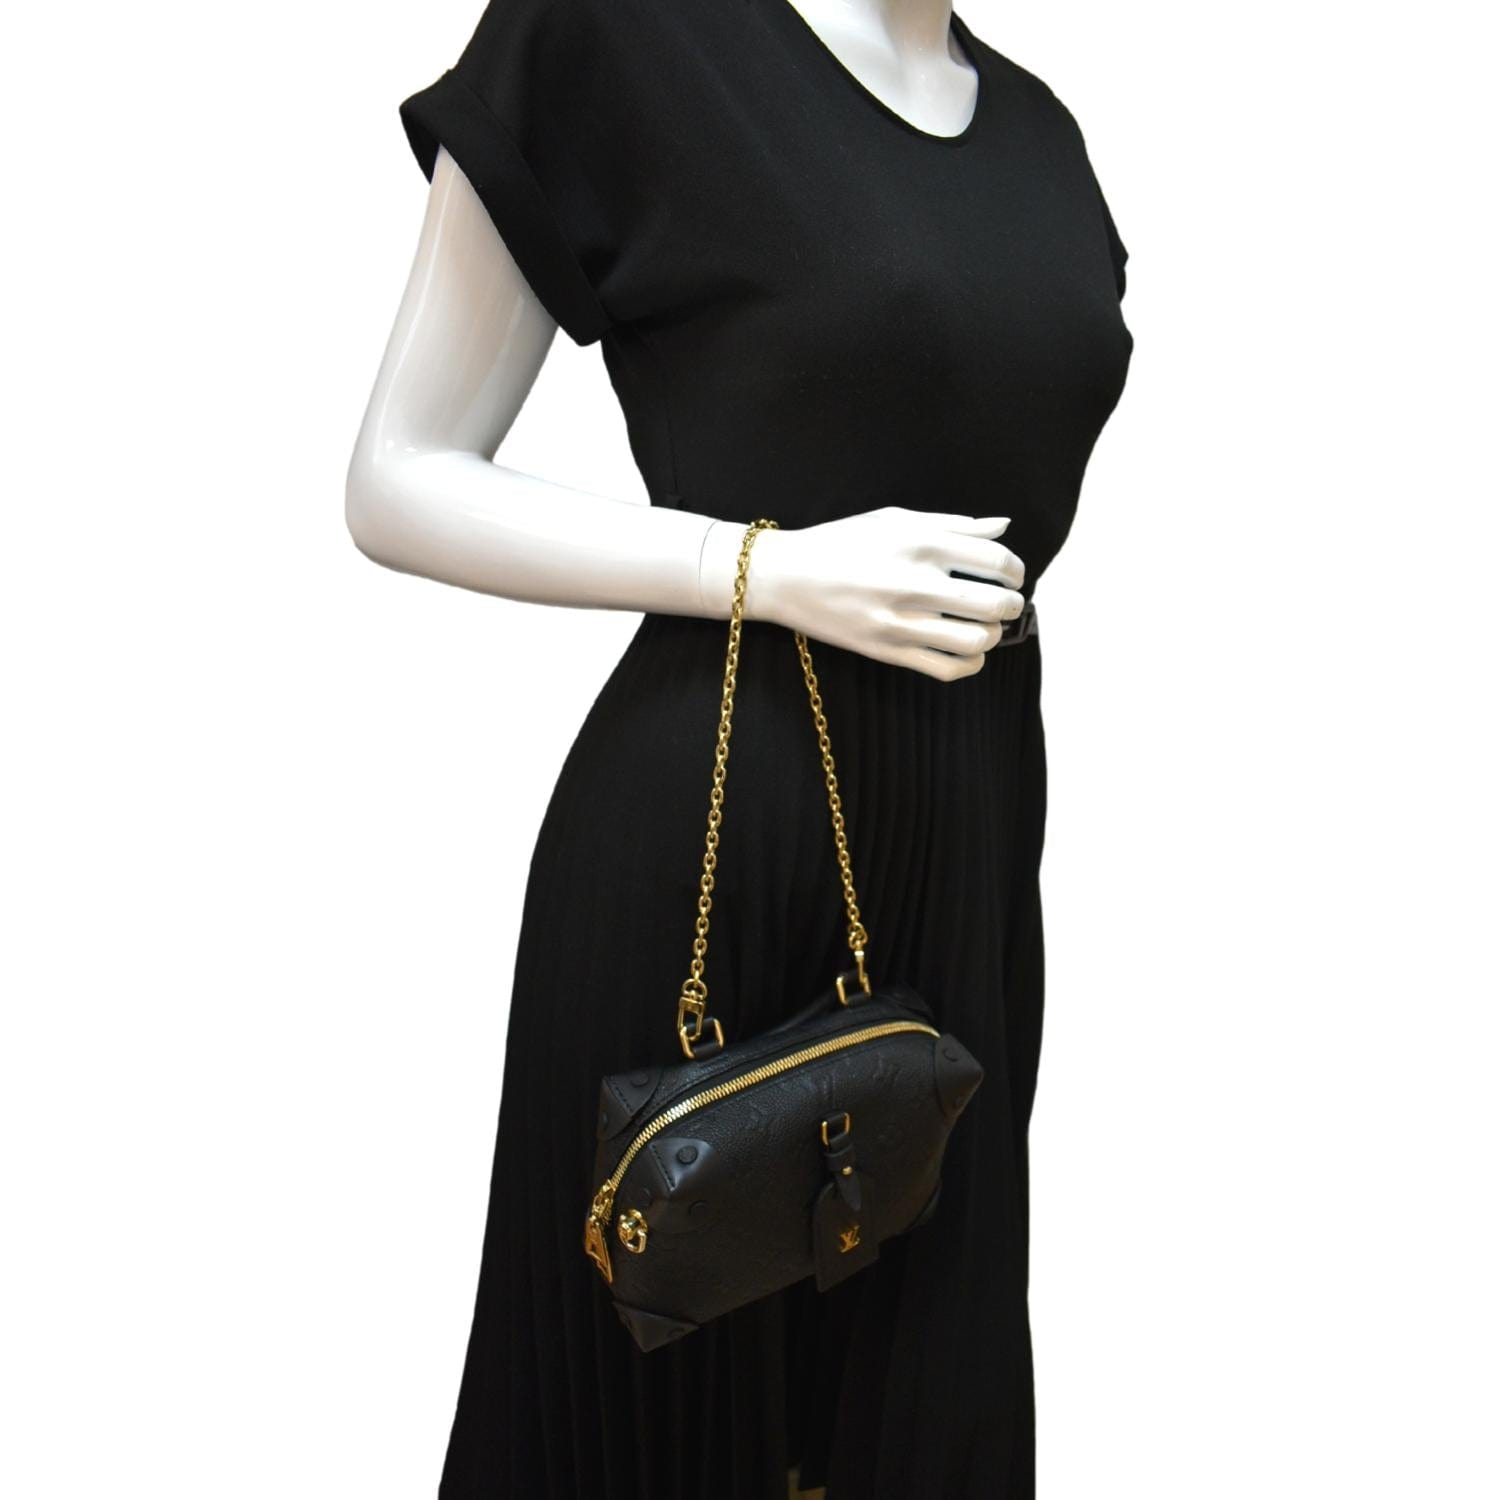 LV PETITE MALLE SOUPLE HANDBAG  Bags, Chanel bag, Bags designer